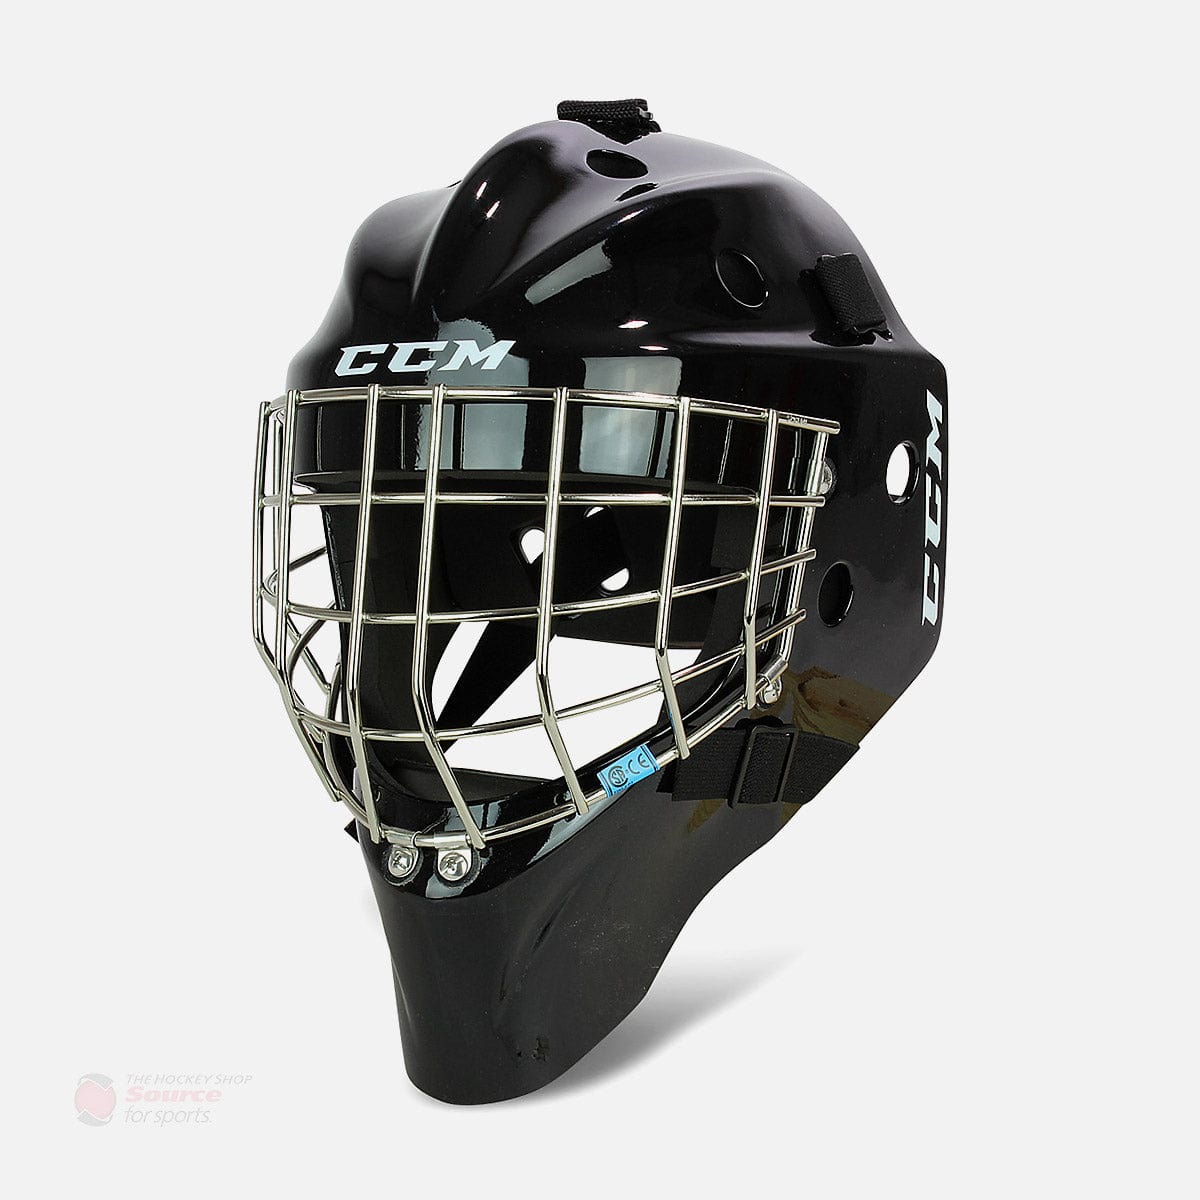 CCM L1.5 Junior Goalie Mask